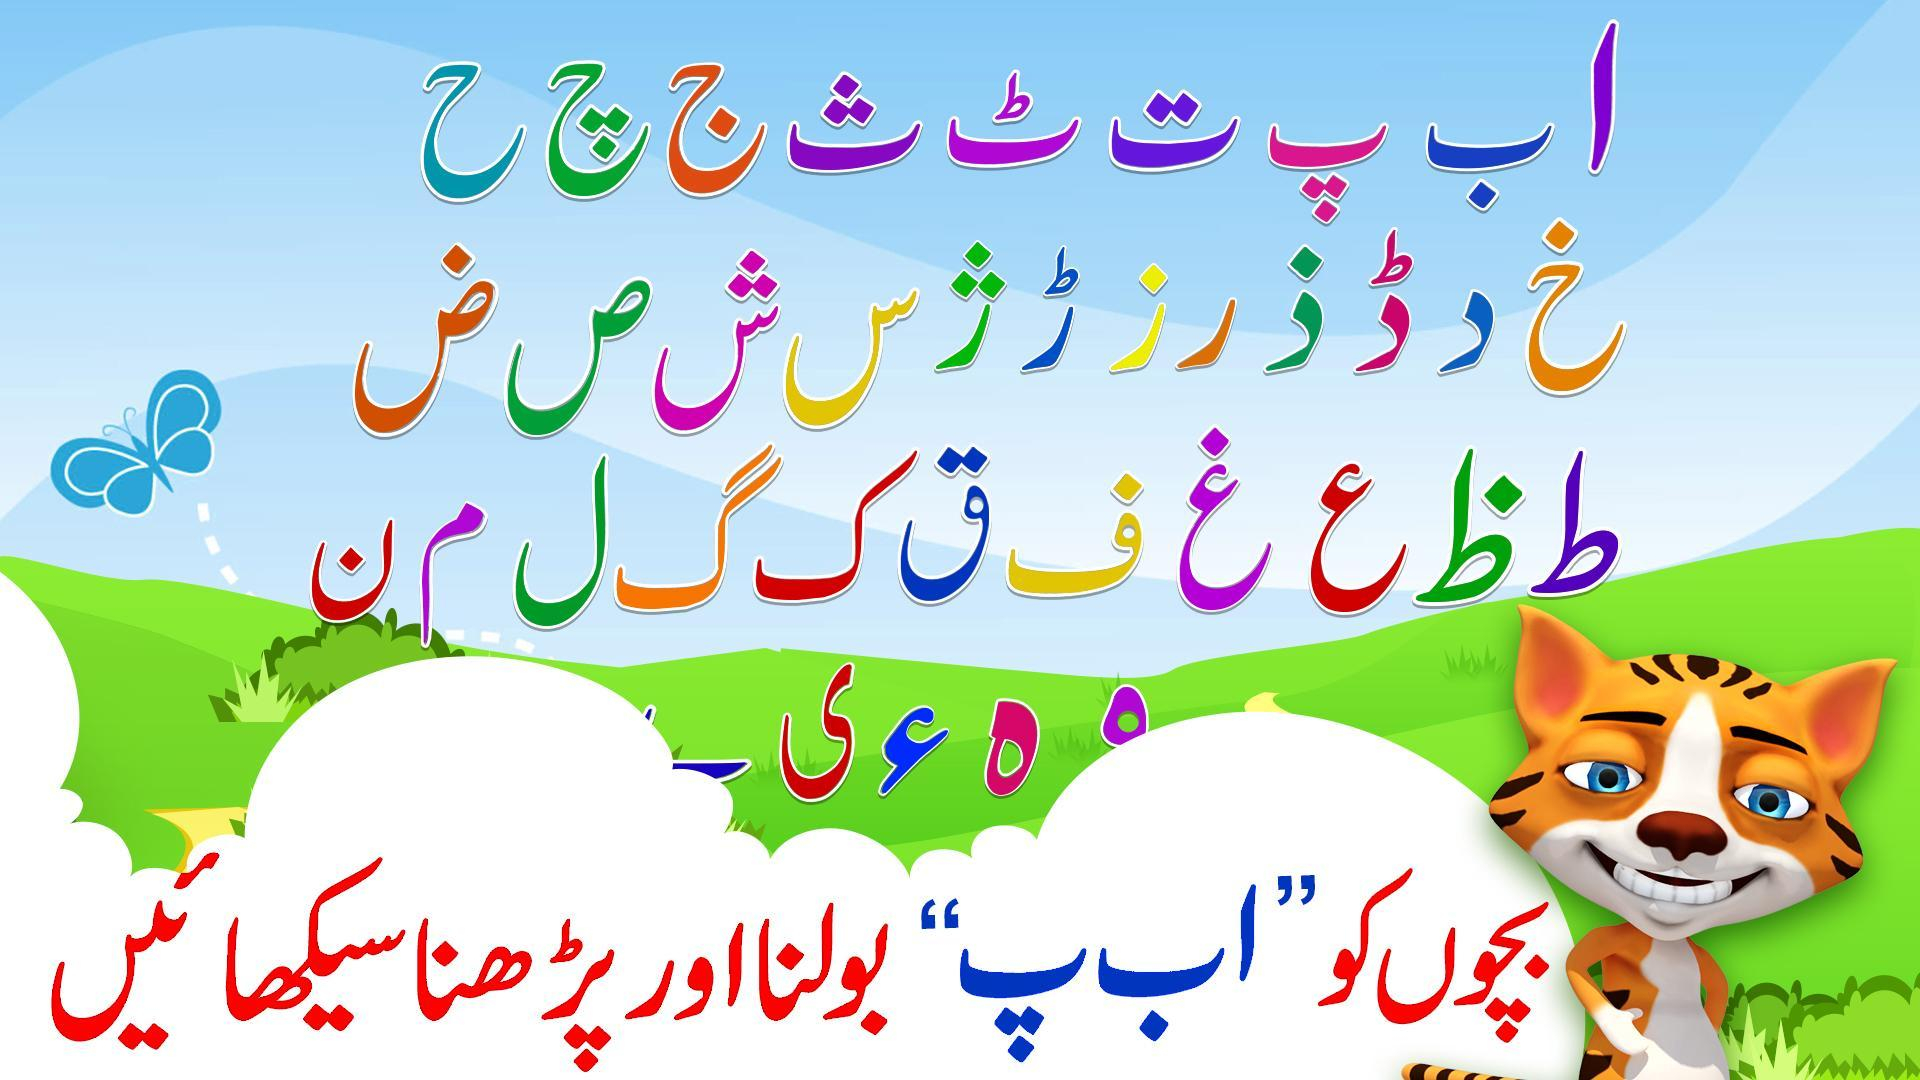 Alif Bay Pay Urdu Song For Kids Para Android - Apk Baixar